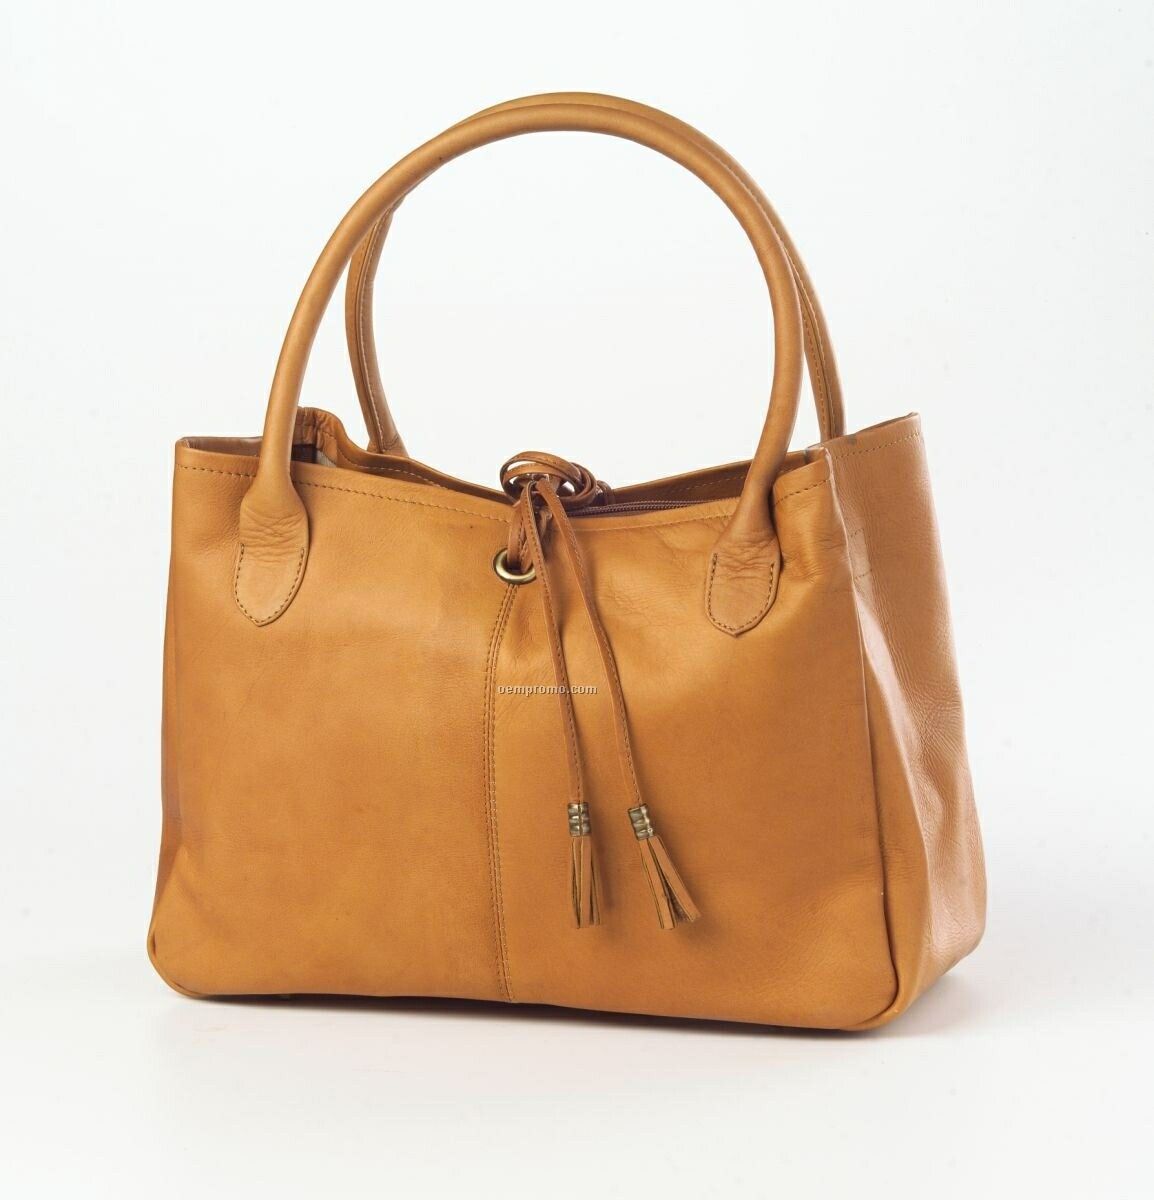 Tassel Handbag - Vachetta Leather